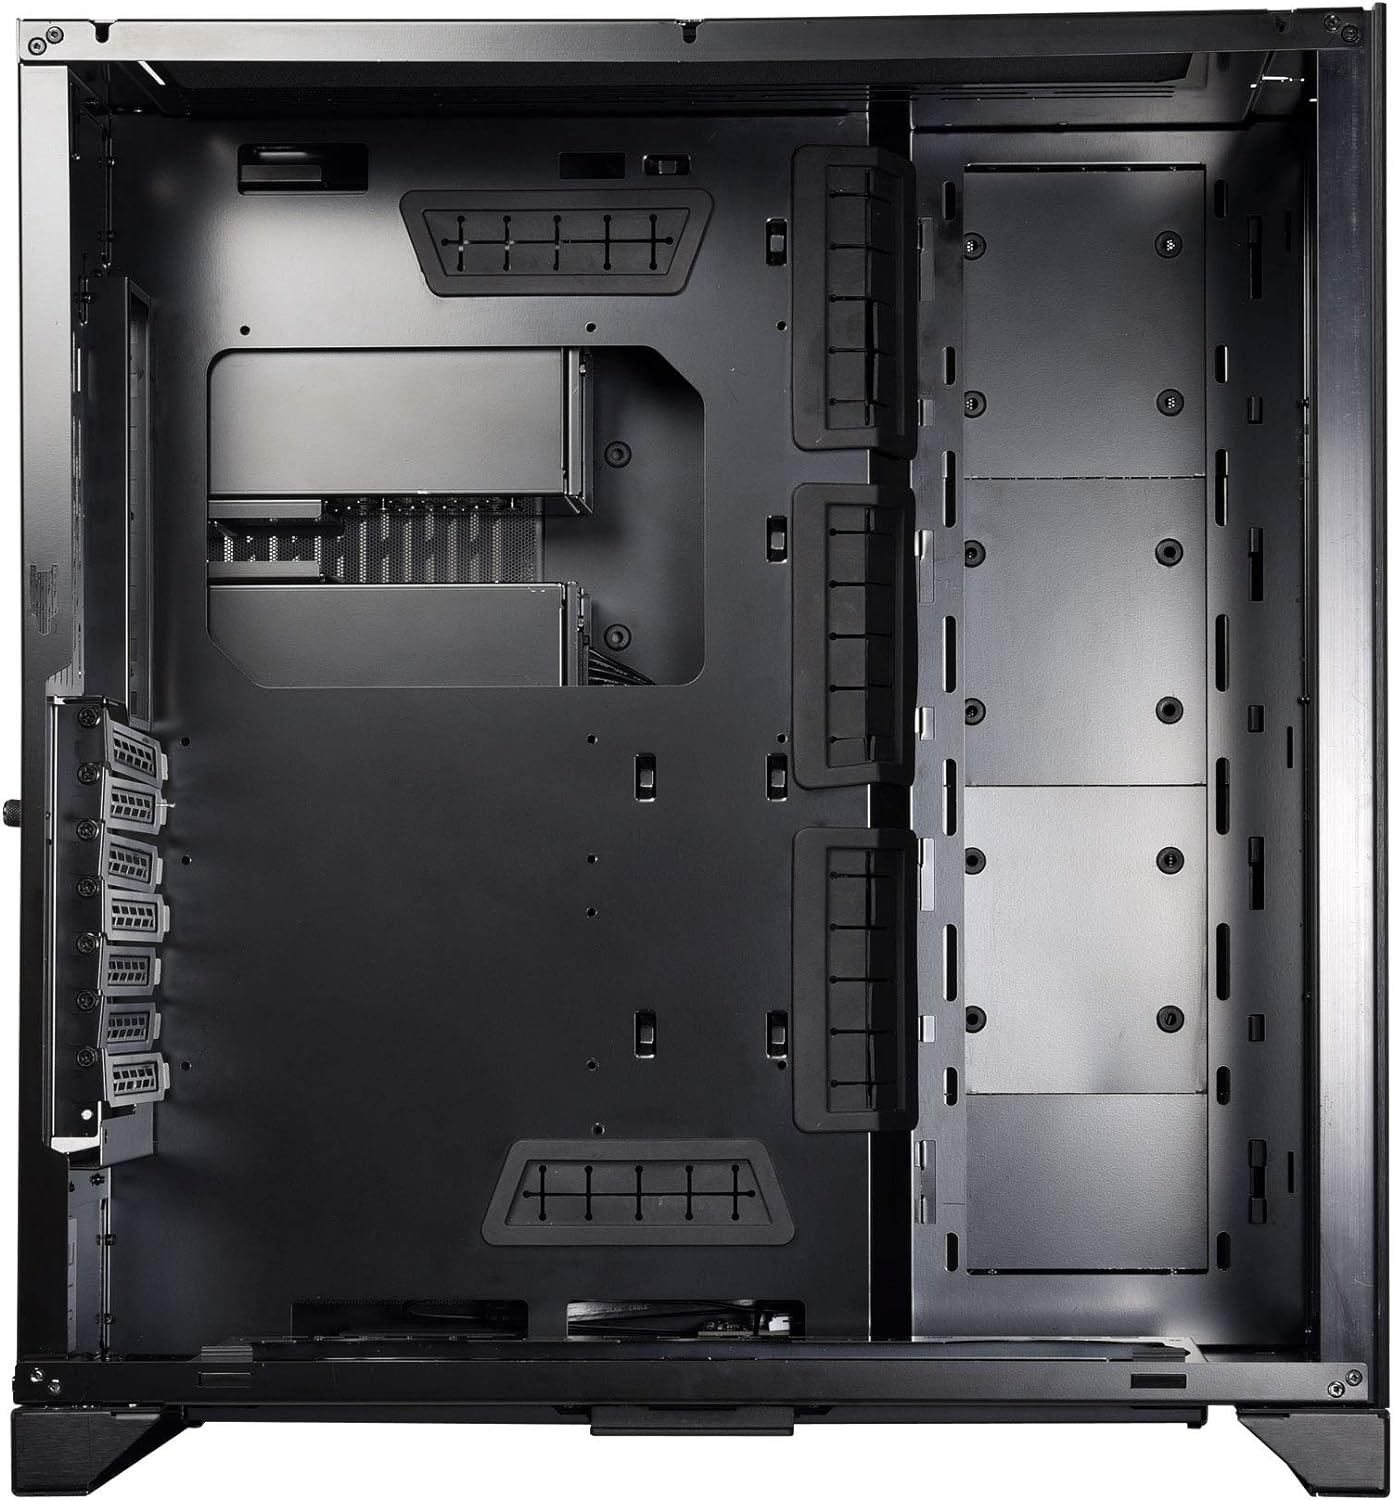 Lian Li O11 Dynamic XL Rog Certified case for high-performance gaming setups 0840353009837